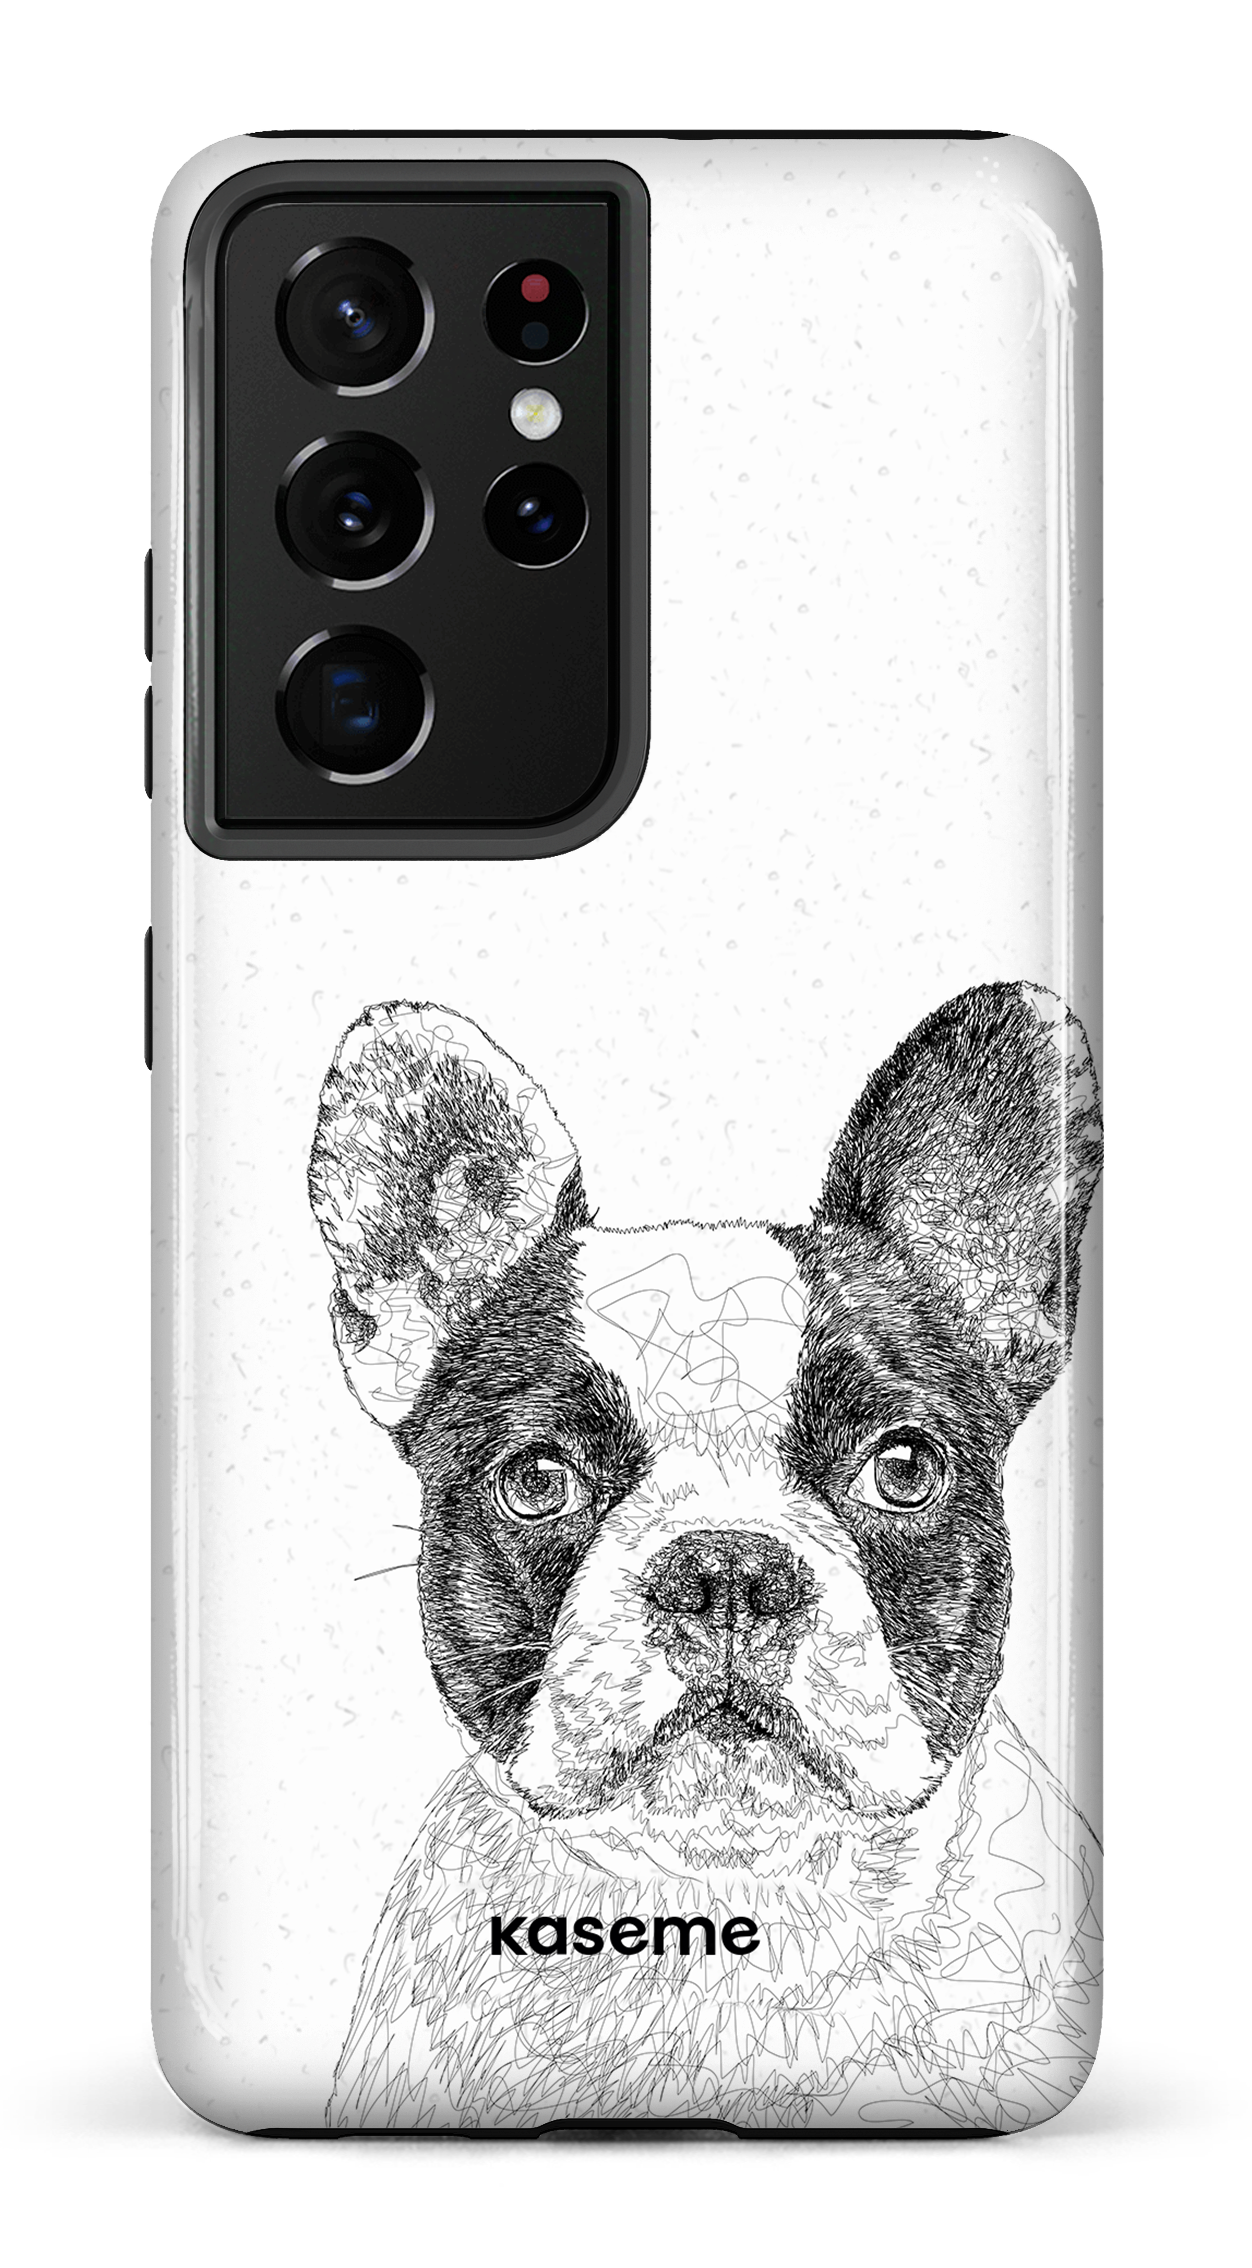 French Bulldog - Galaxy S21 Ultra